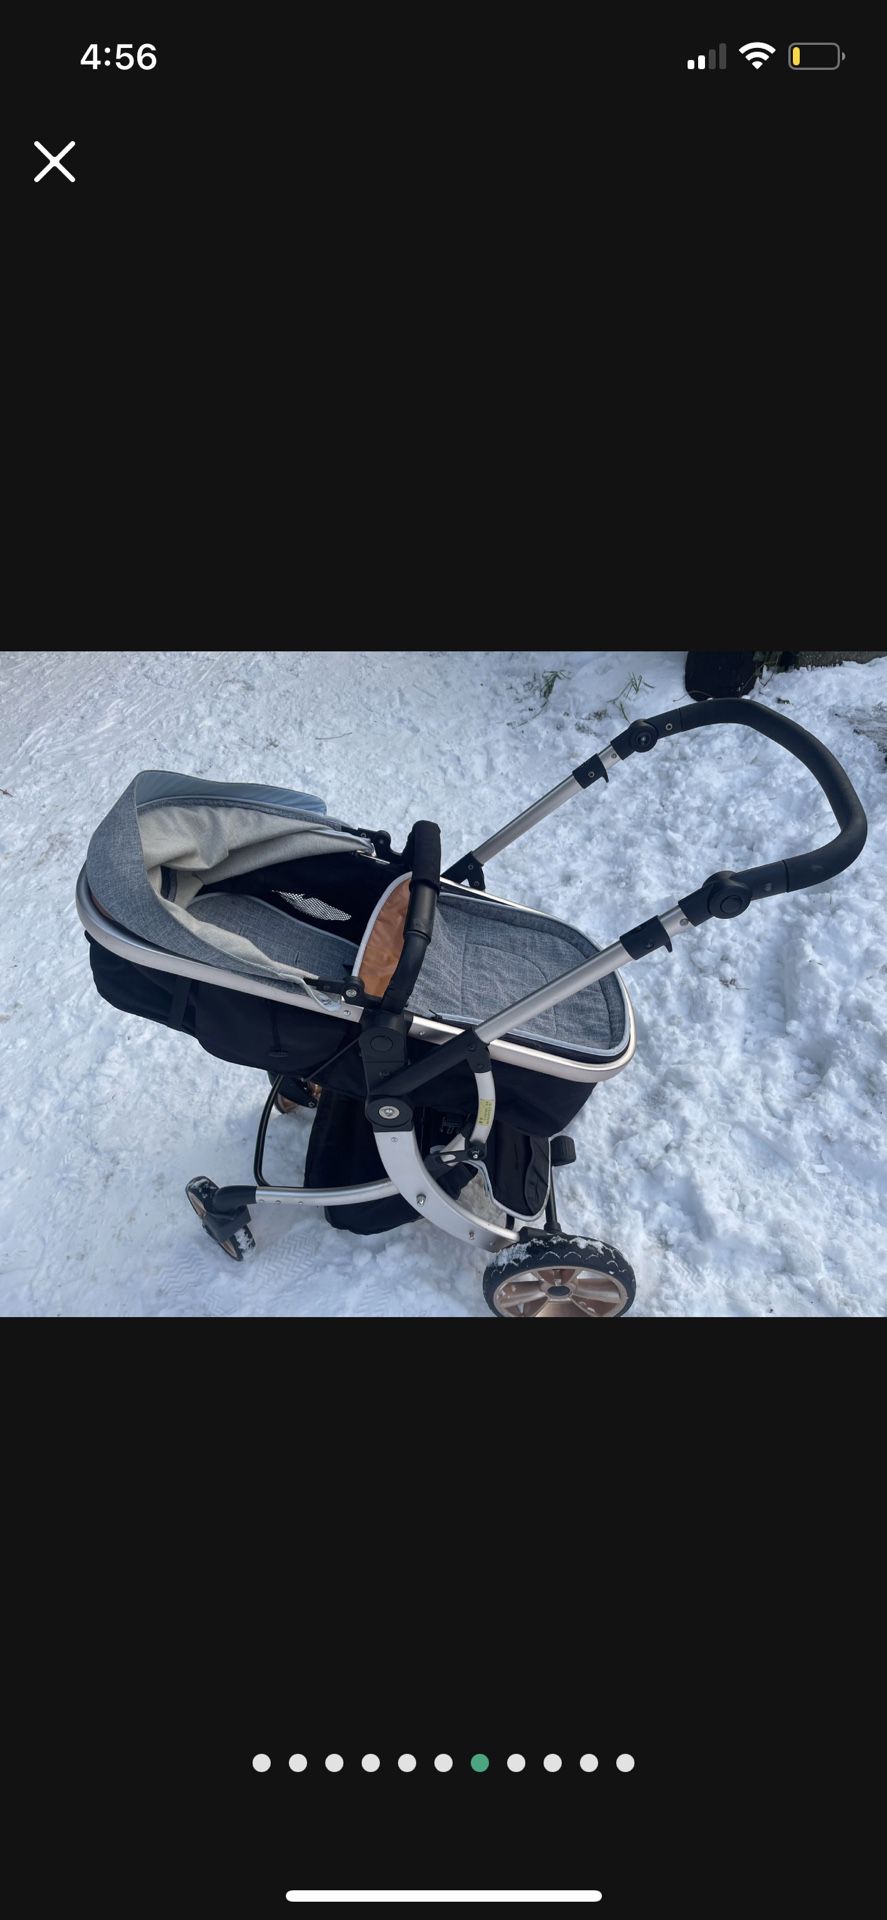 Beautiful Luxury Convertible Basinett Stroller. Converts Into Regular Toddler Stroller!